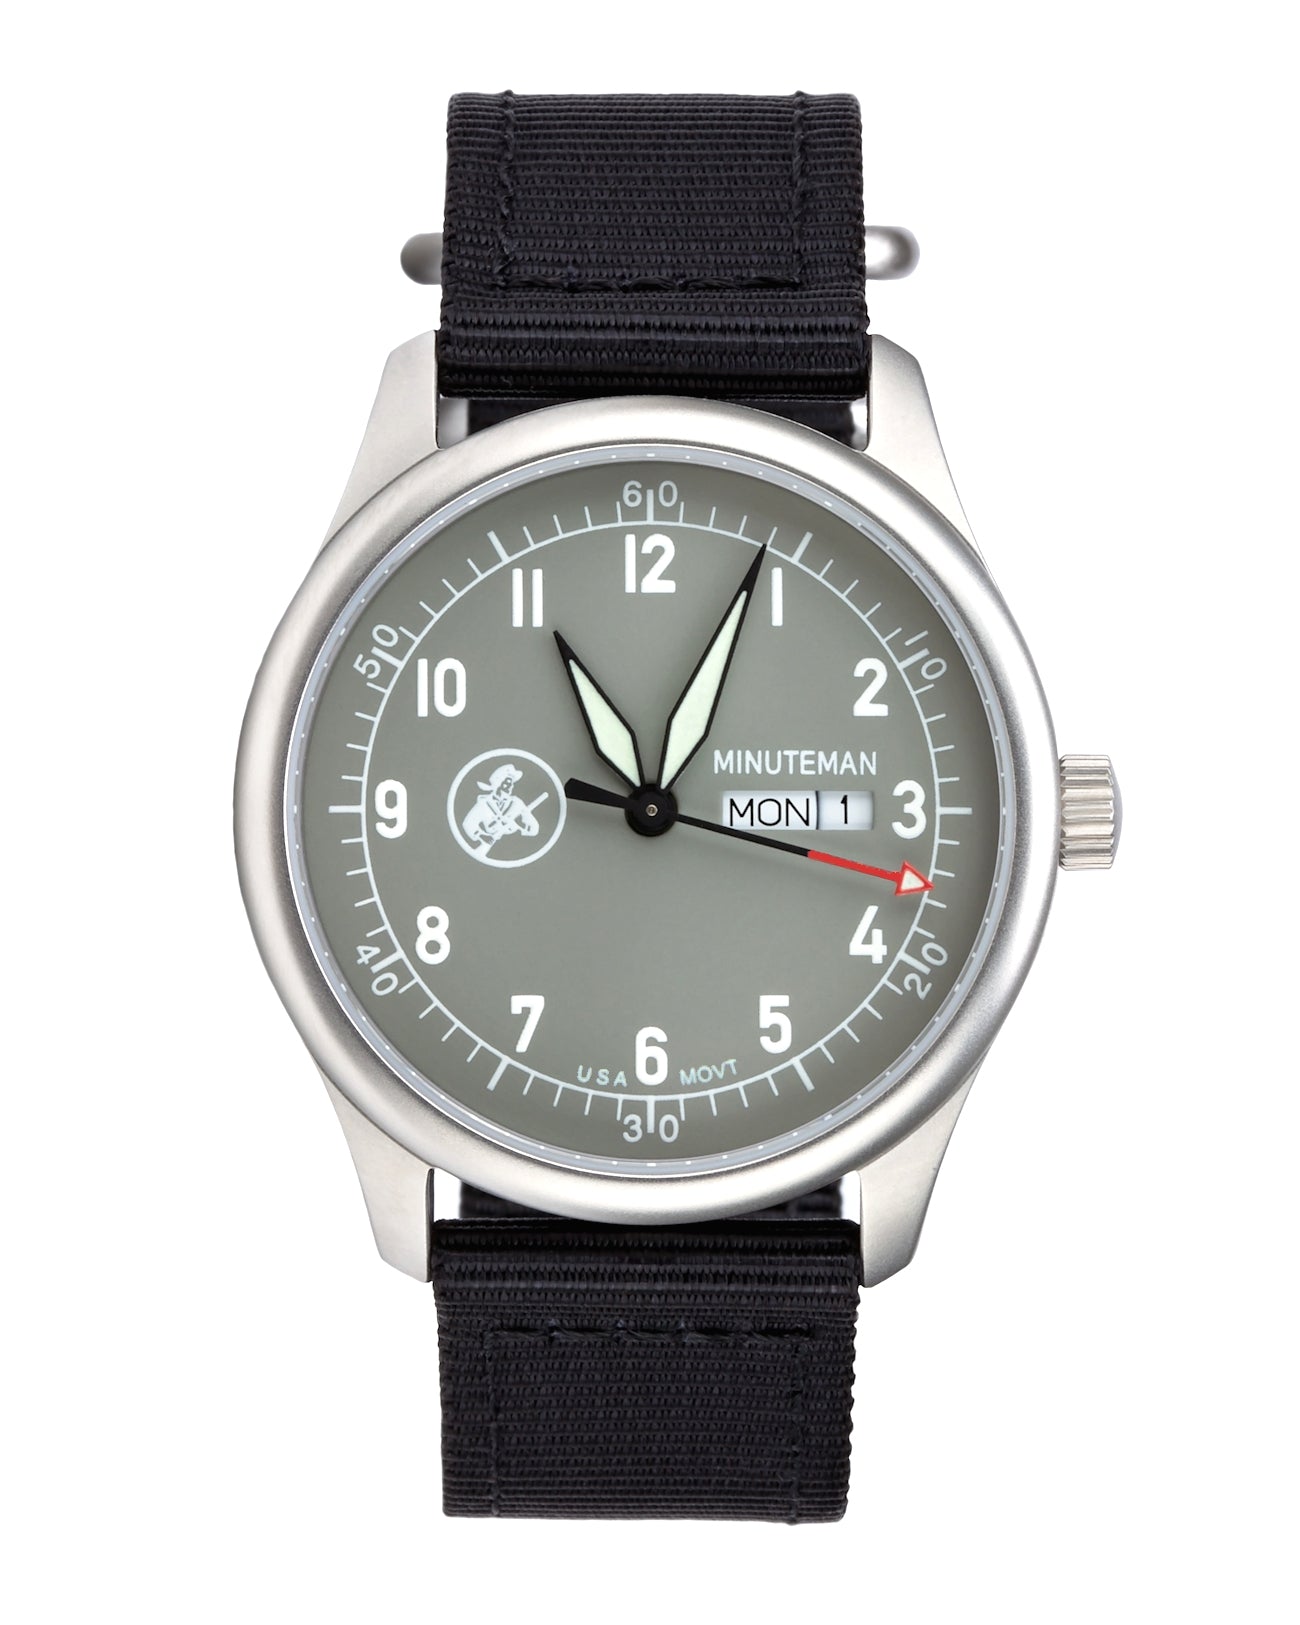 Sold Out! Minuteman A11 Field Watch Powered by Ameriquartz Battleship Grey Dial